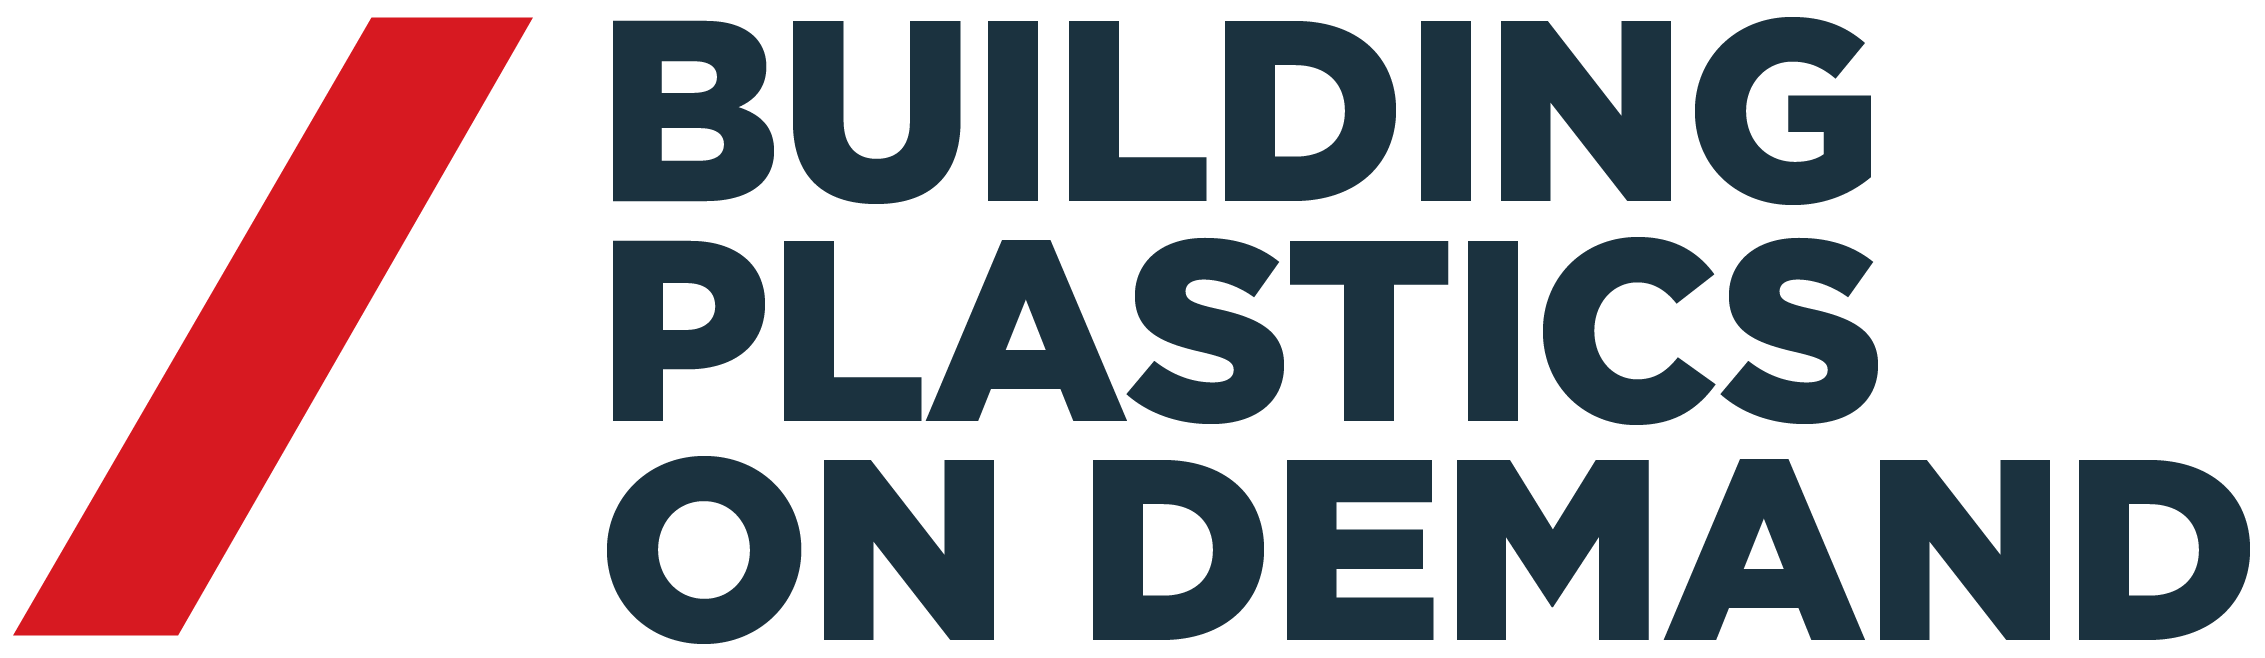 Building Plastics On Demand logo